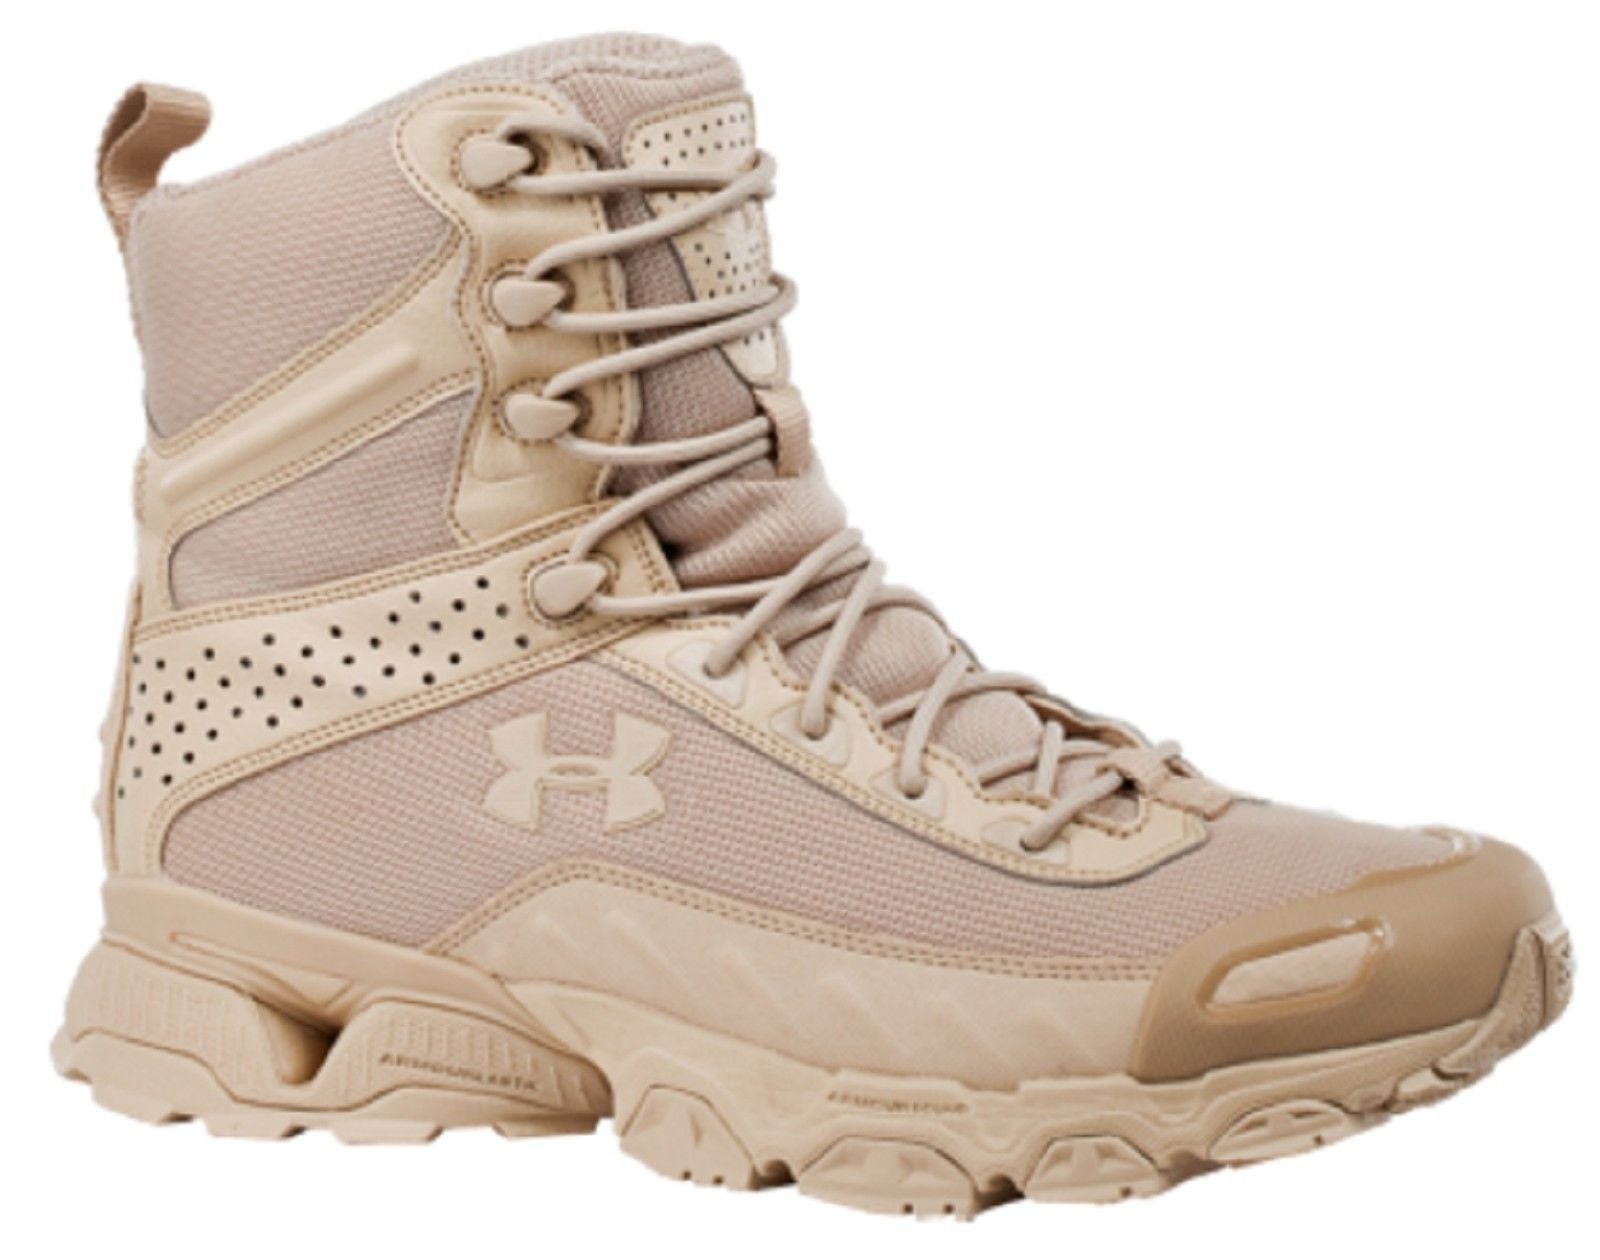 Men's Under Armour Valsetz Military Boots - UA Lightweight Tactical Bo ...